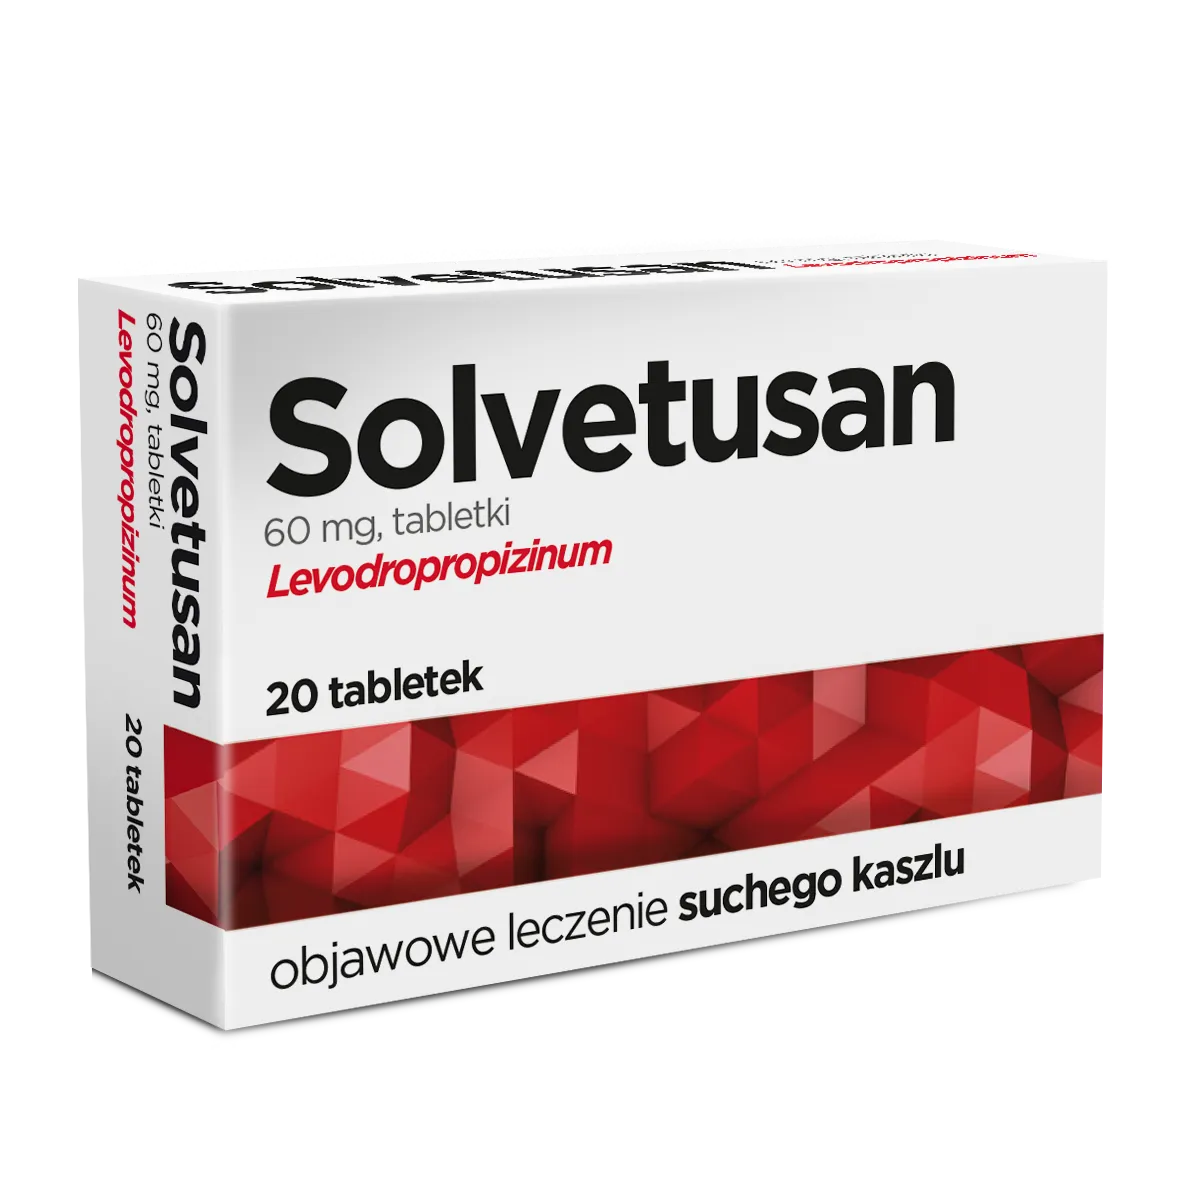 Solvetusan, 60 mg, 20 tabletek